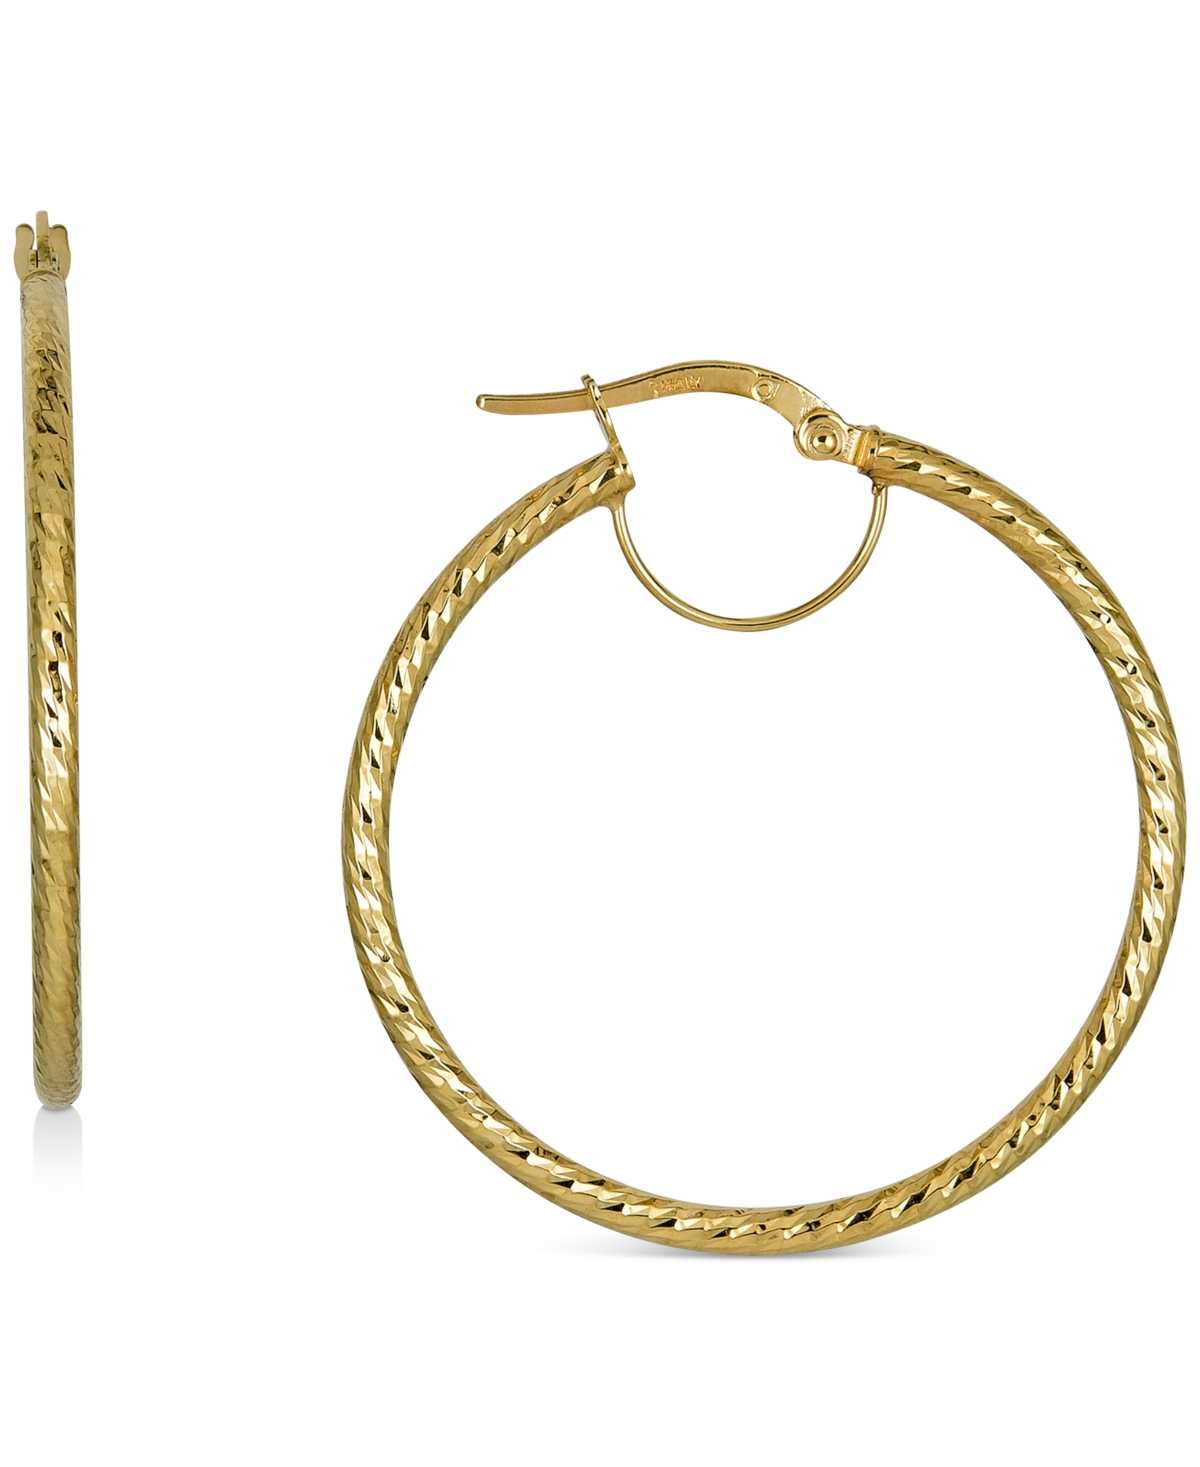 Textured Medium Hoop Earrings in 10k Gold, 30mm - Yellow Gold